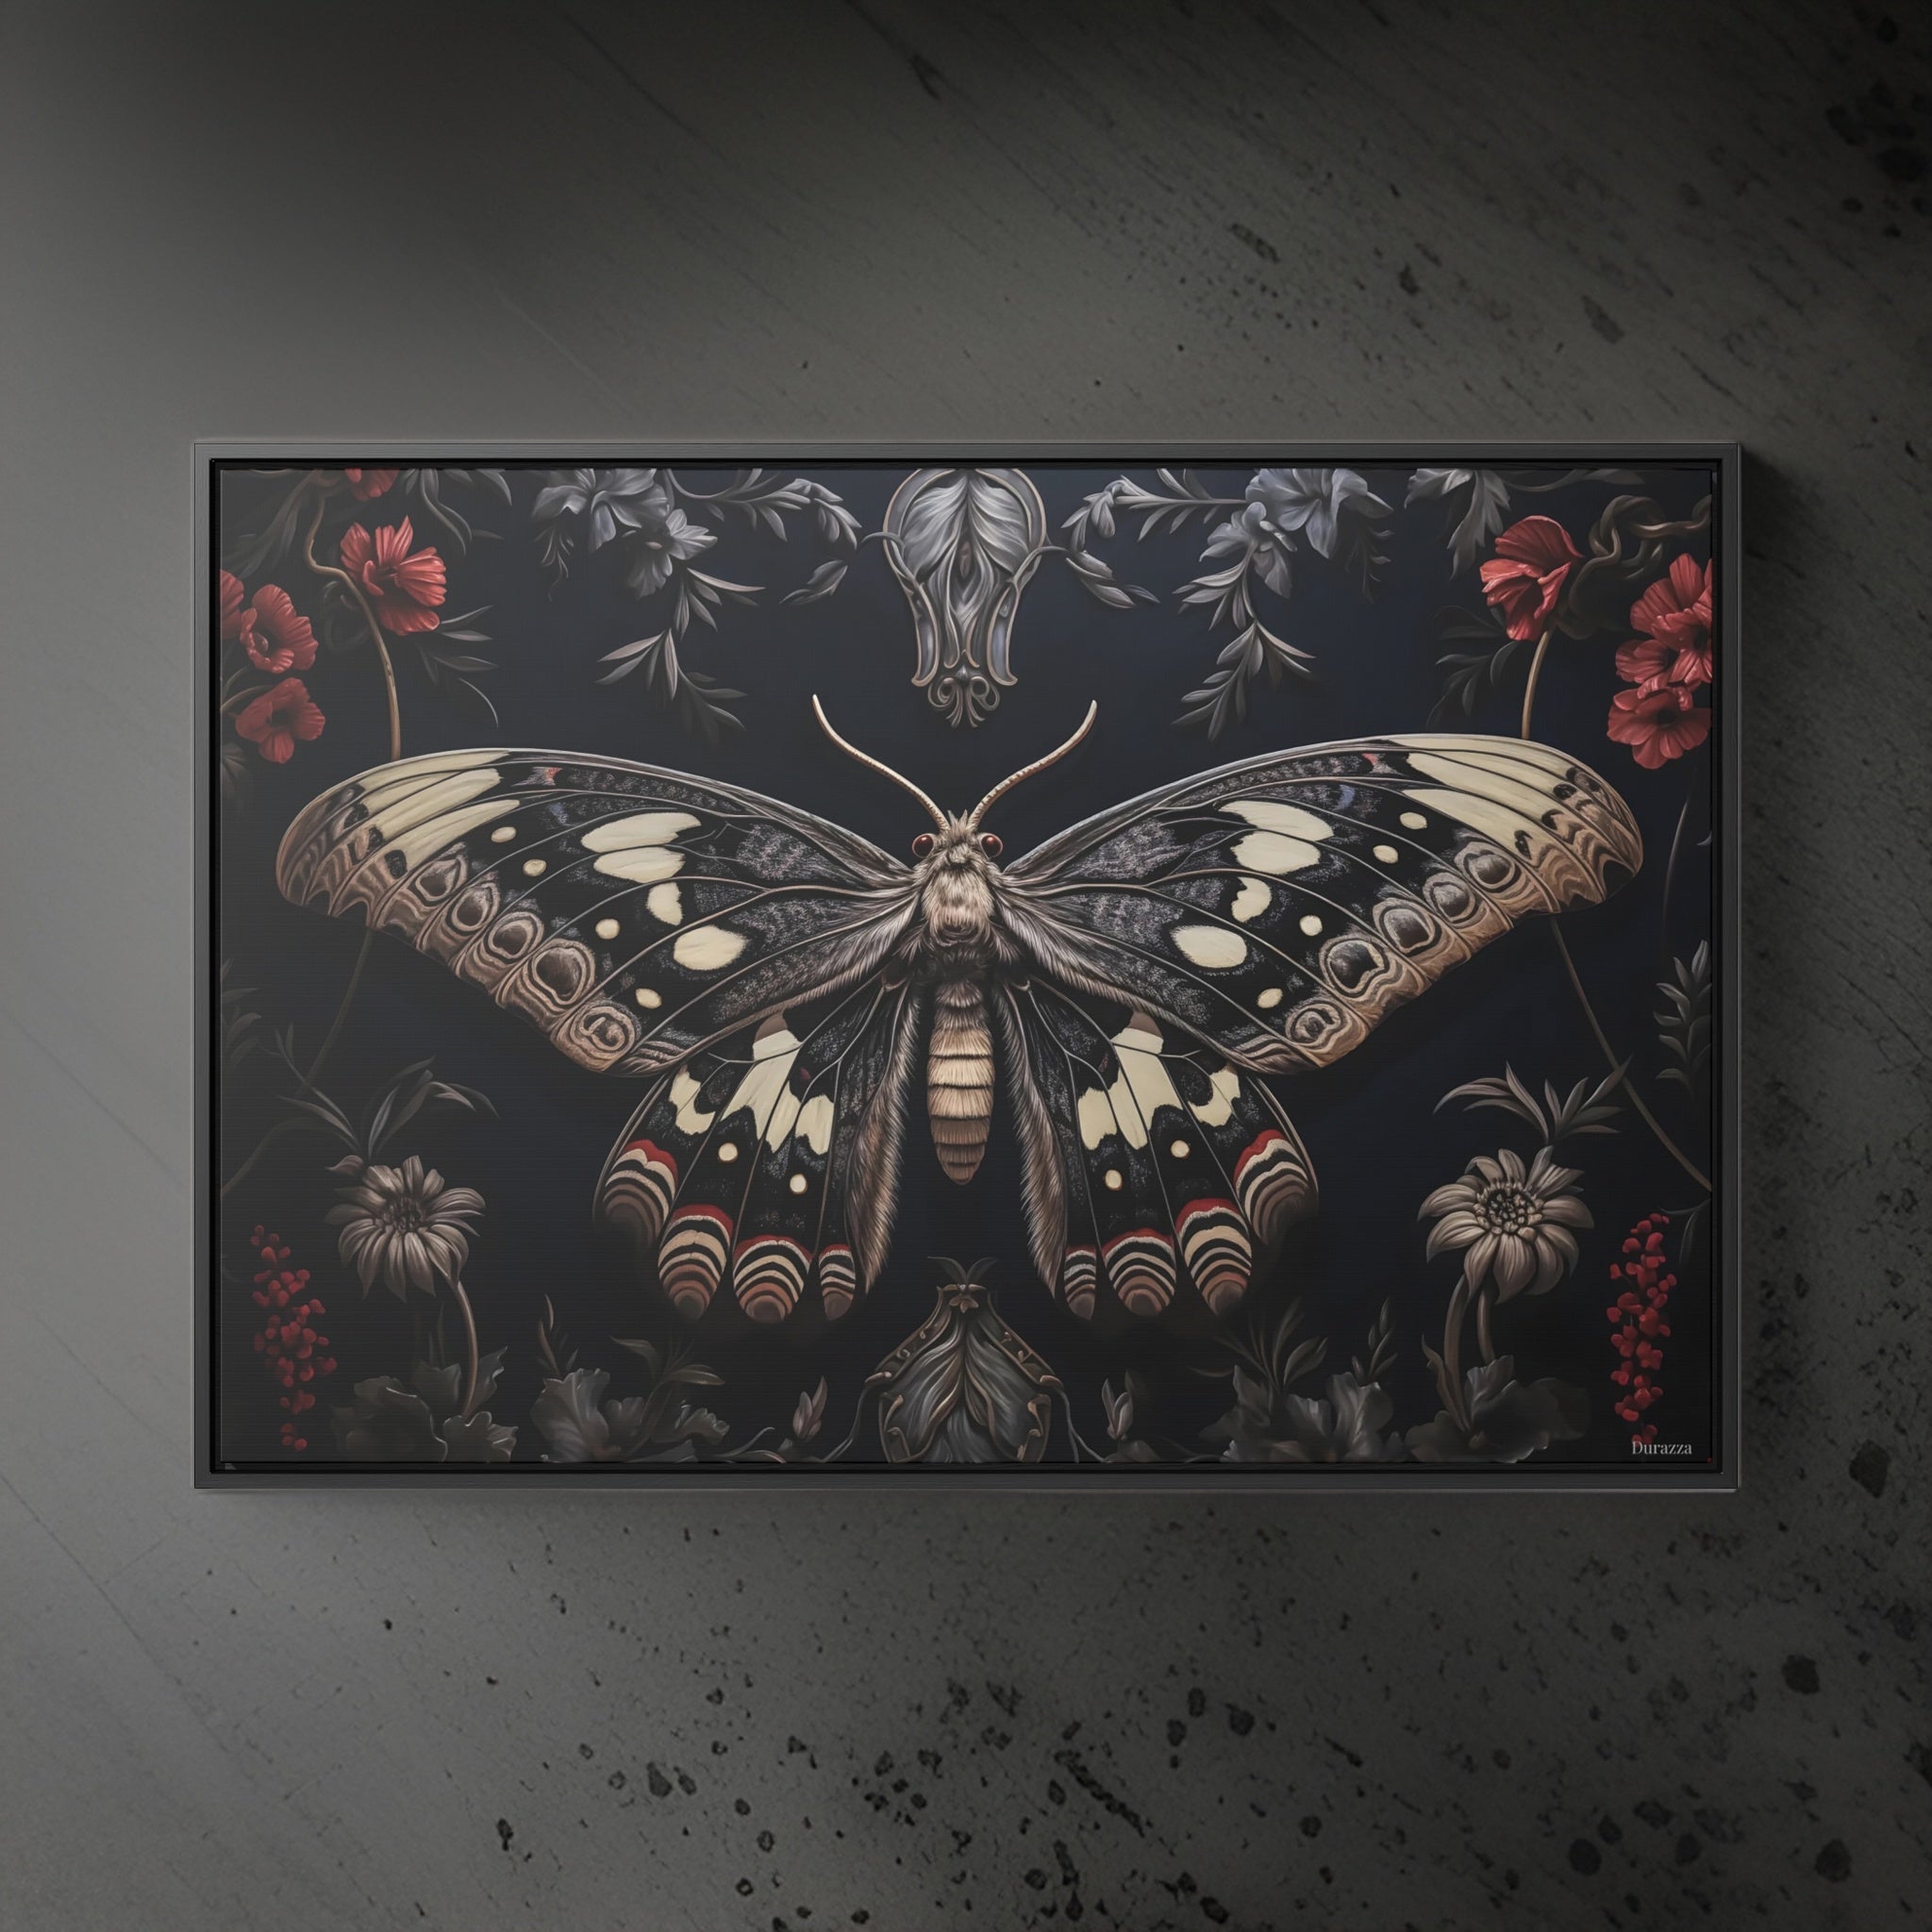 Elegant Black Moth Painting: Gothic Wall Art